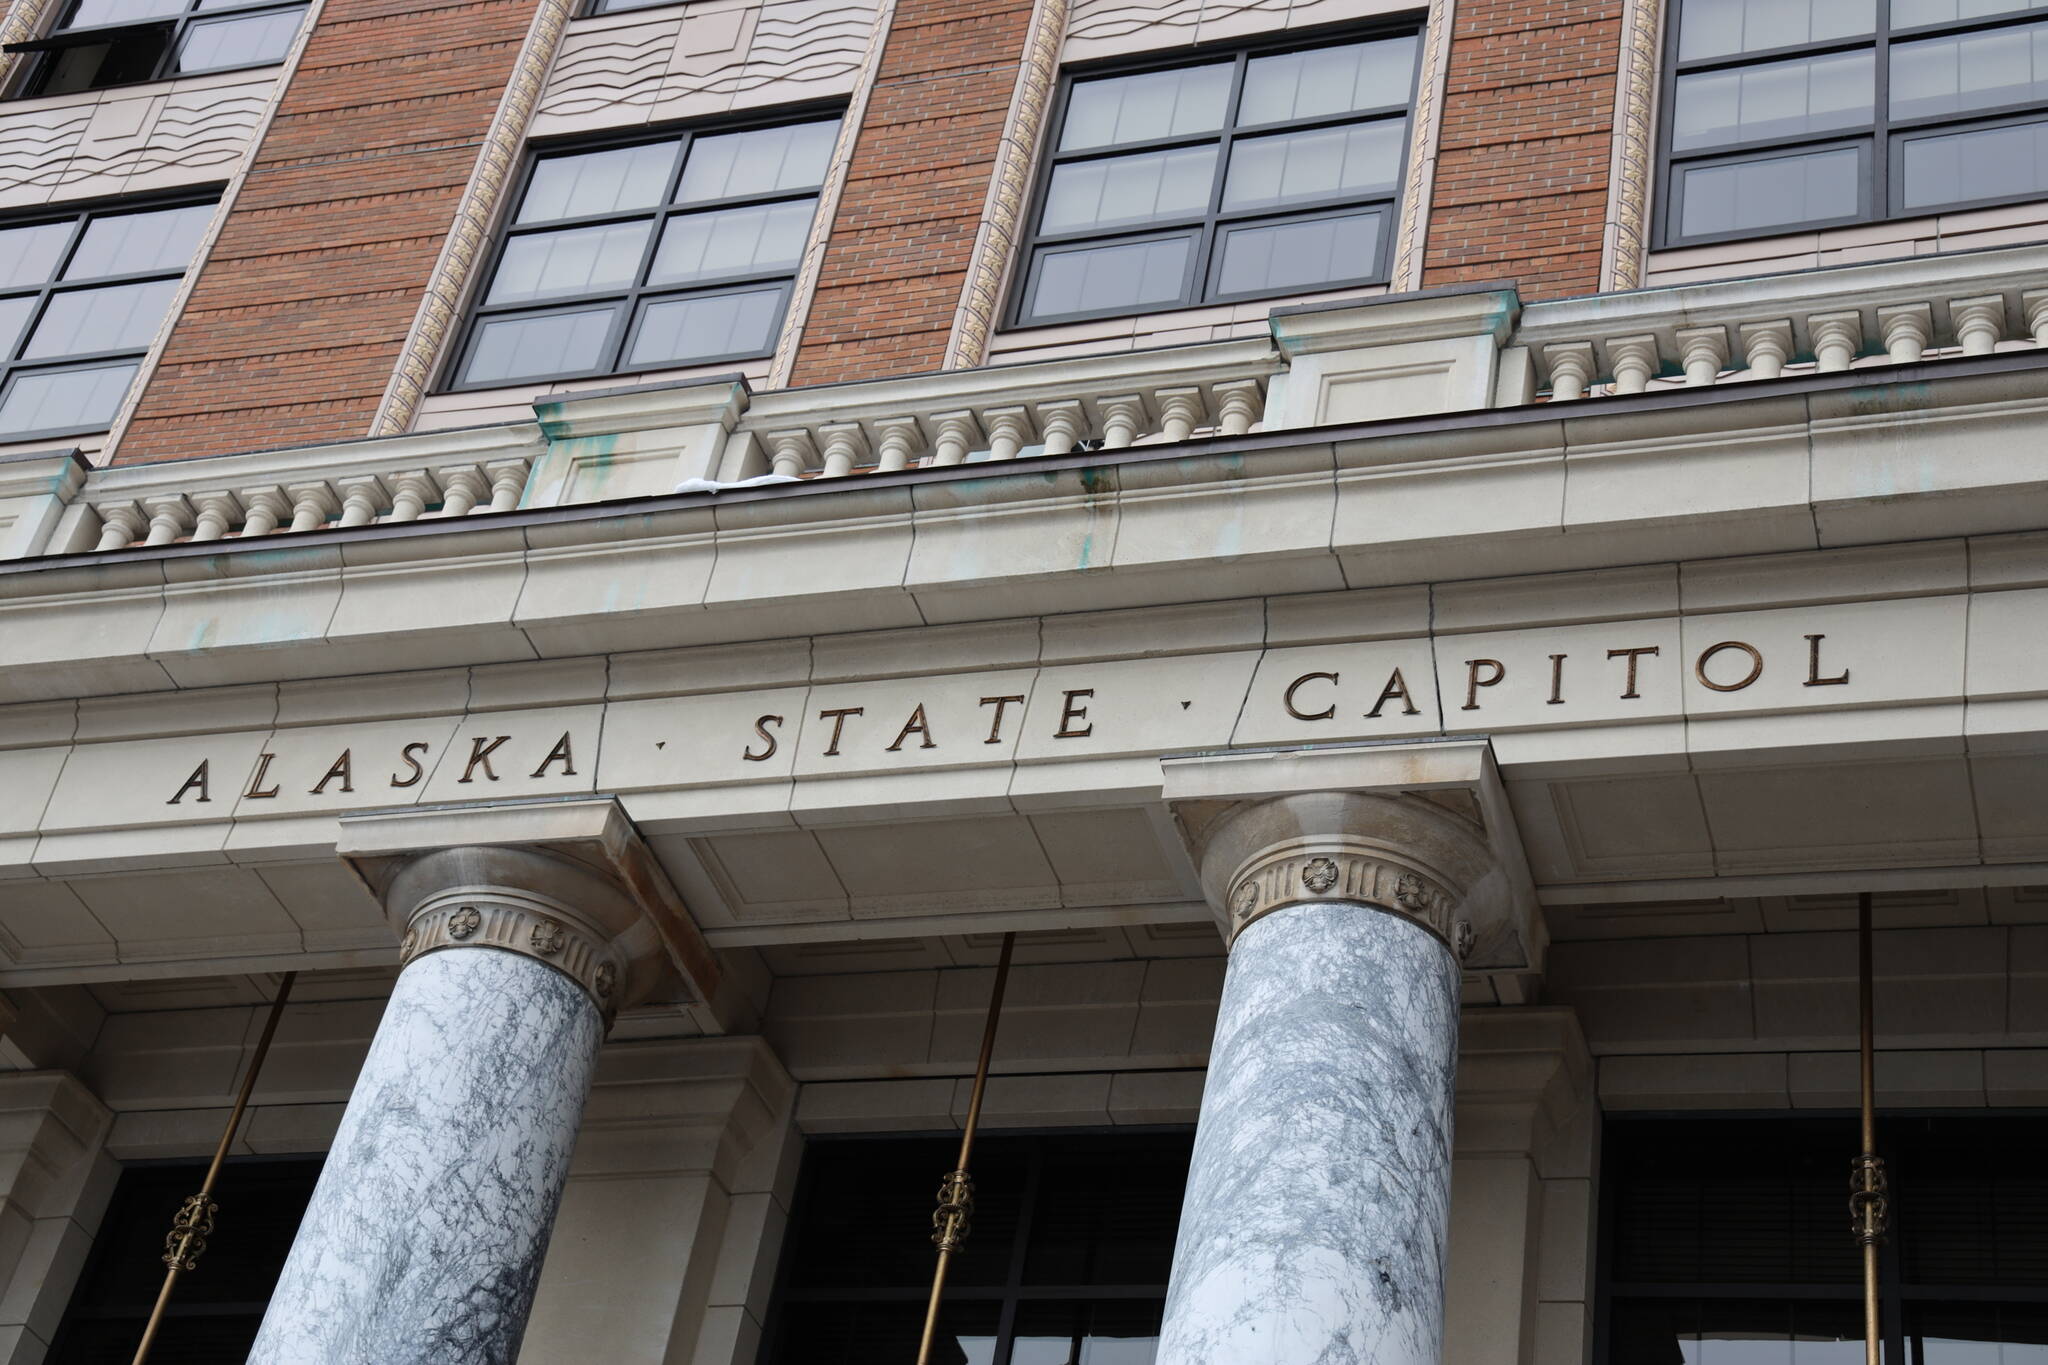 The Alaska State Capitol is seen in Juneau, Alaska. (Clarise Larson / Juneau Empire File)